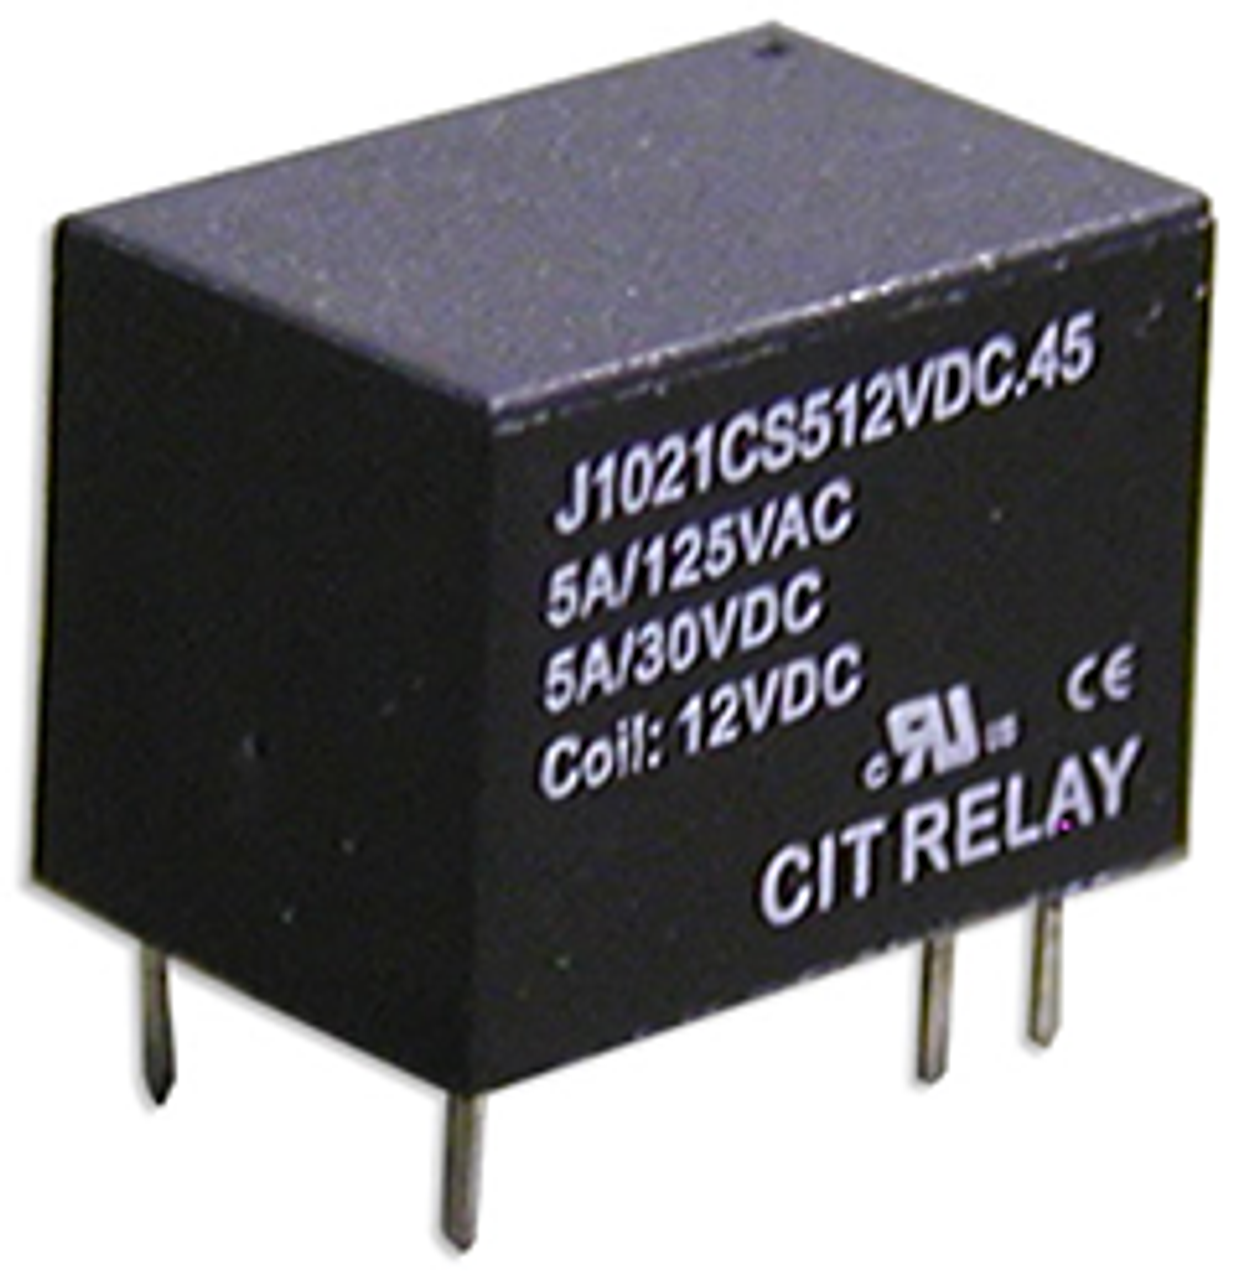 CIT Relay and Switch J1021CS16VDC.36 Signal Relays